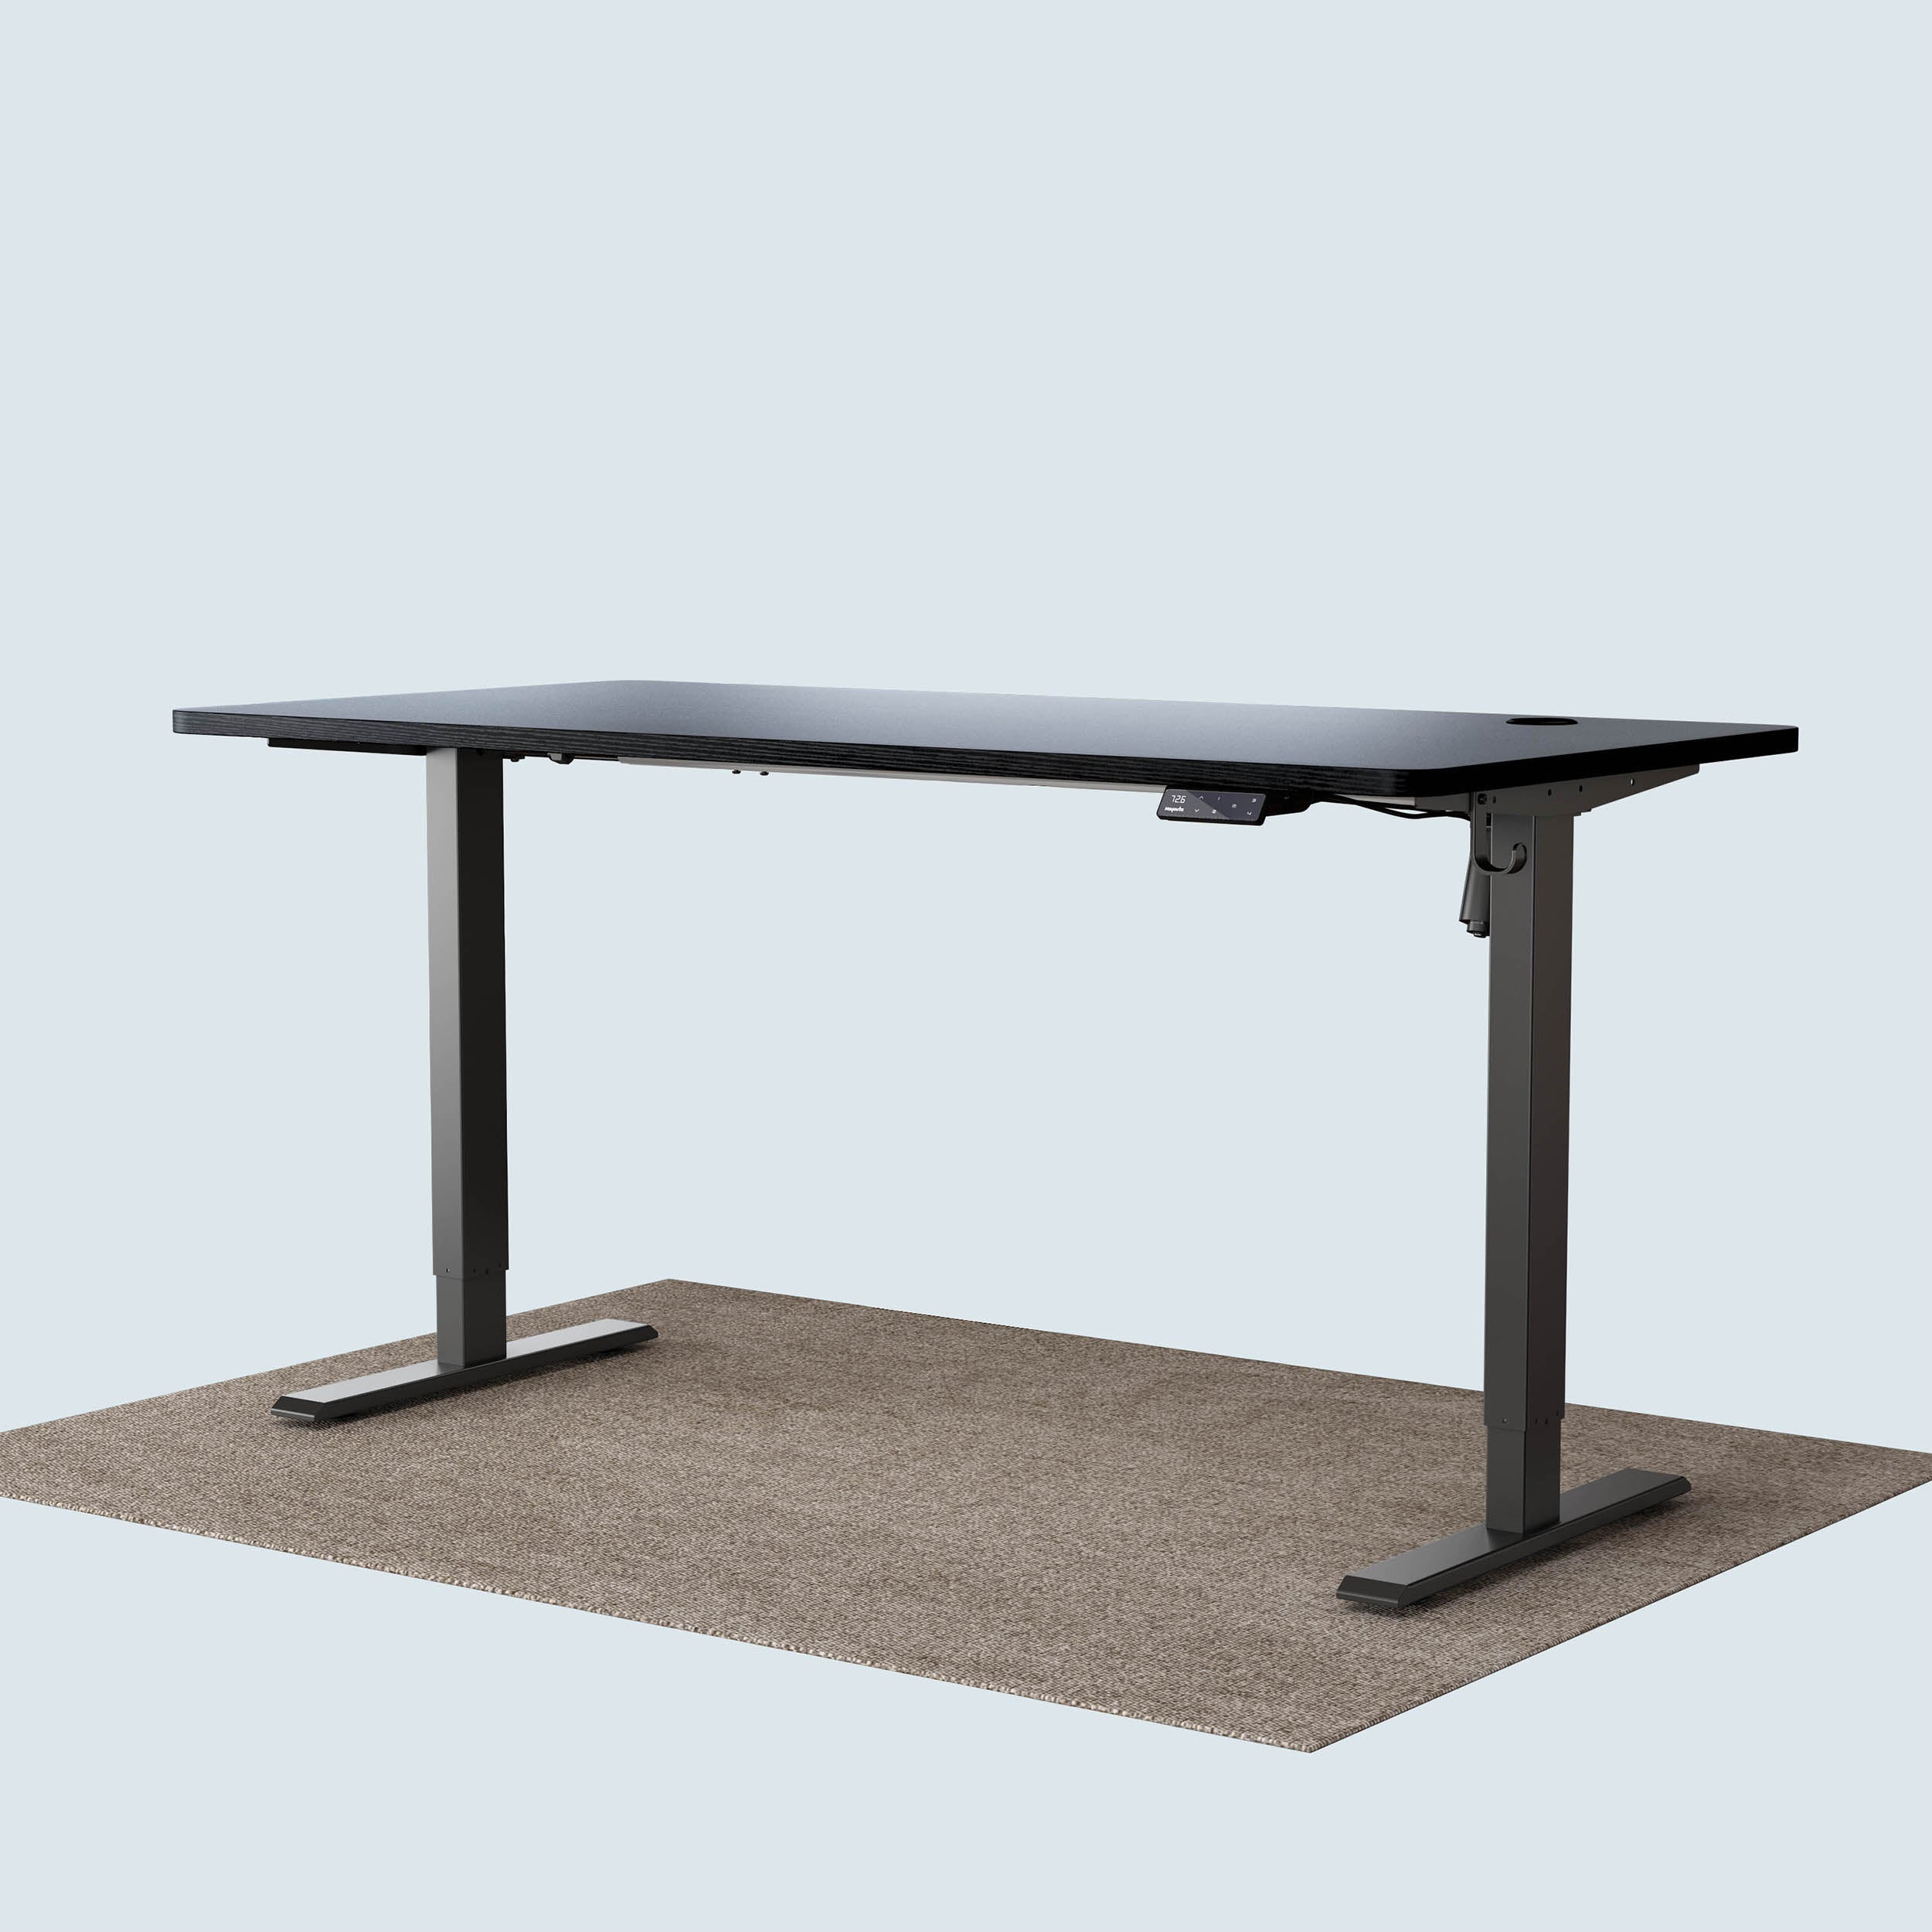 Maidesite T1 Basic height adjustable desk black frame with 160x80cm desktop